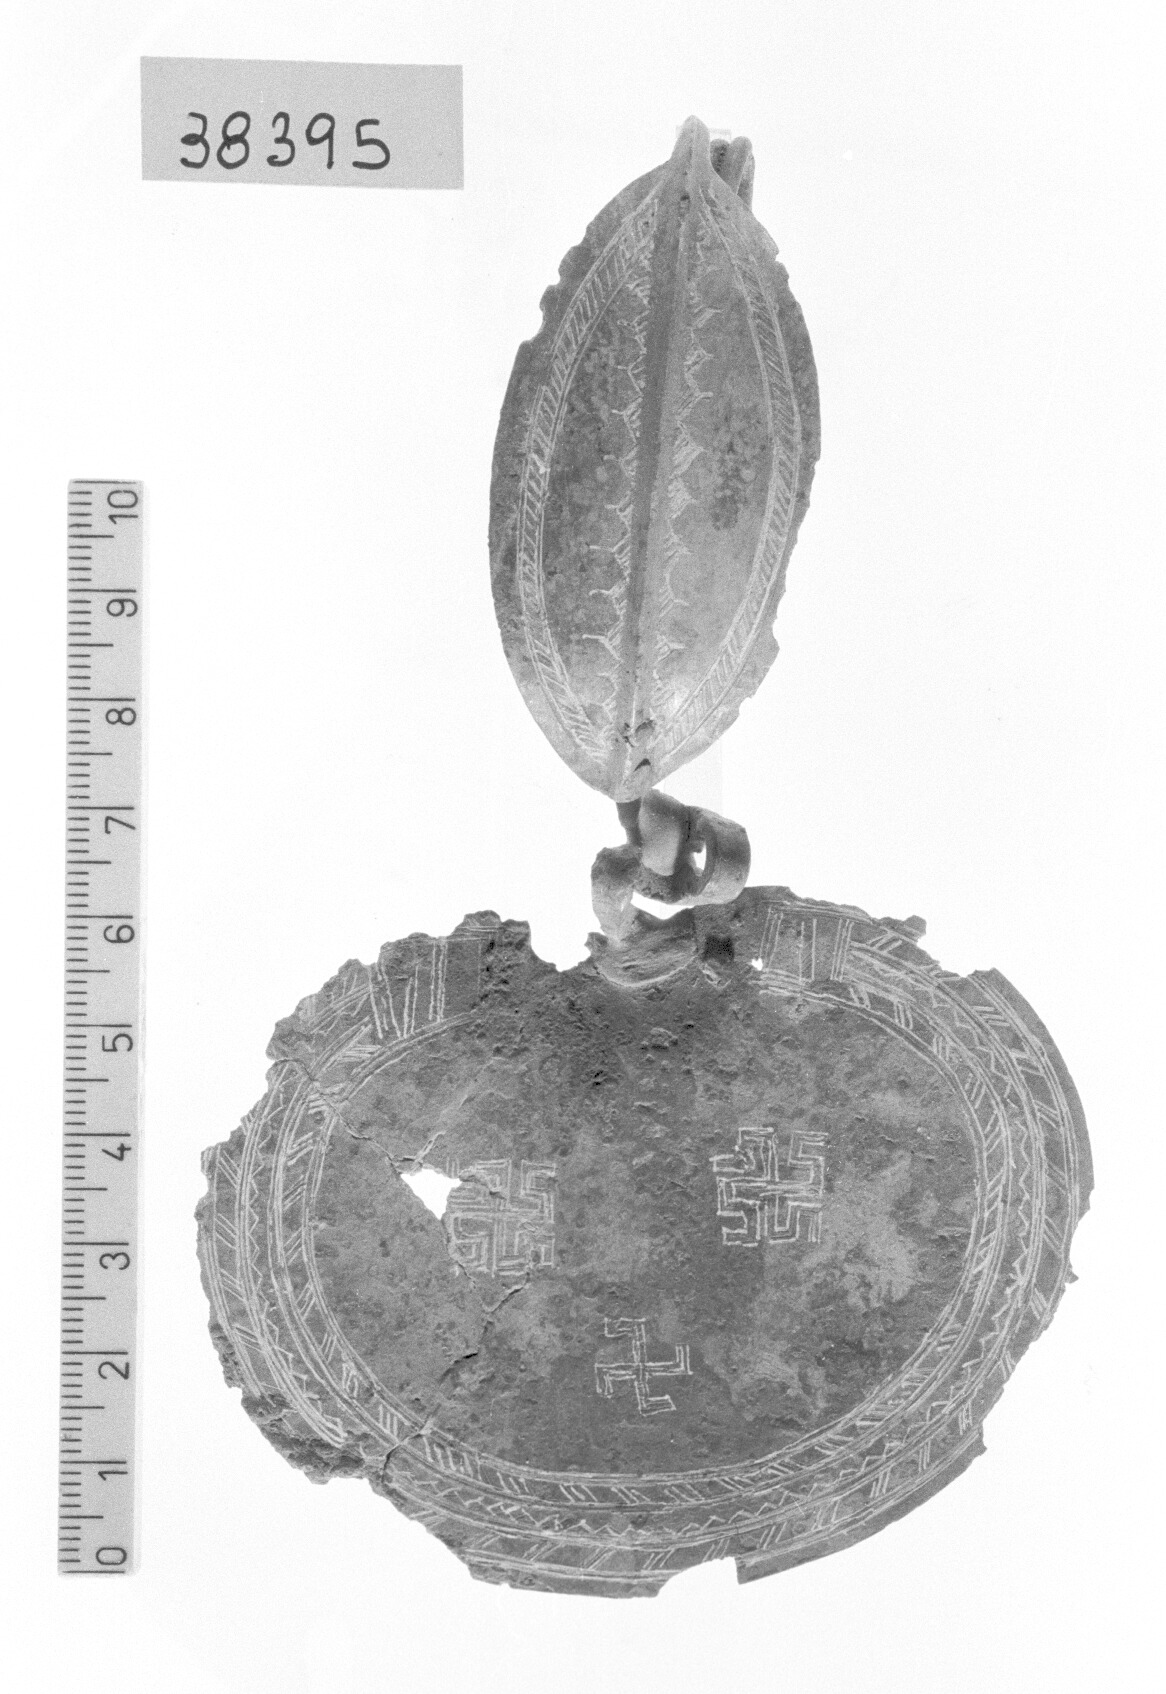 fibula ad arco a foglia e staffa a disco - Piceno I-II (secc. IX-VIII a.C)